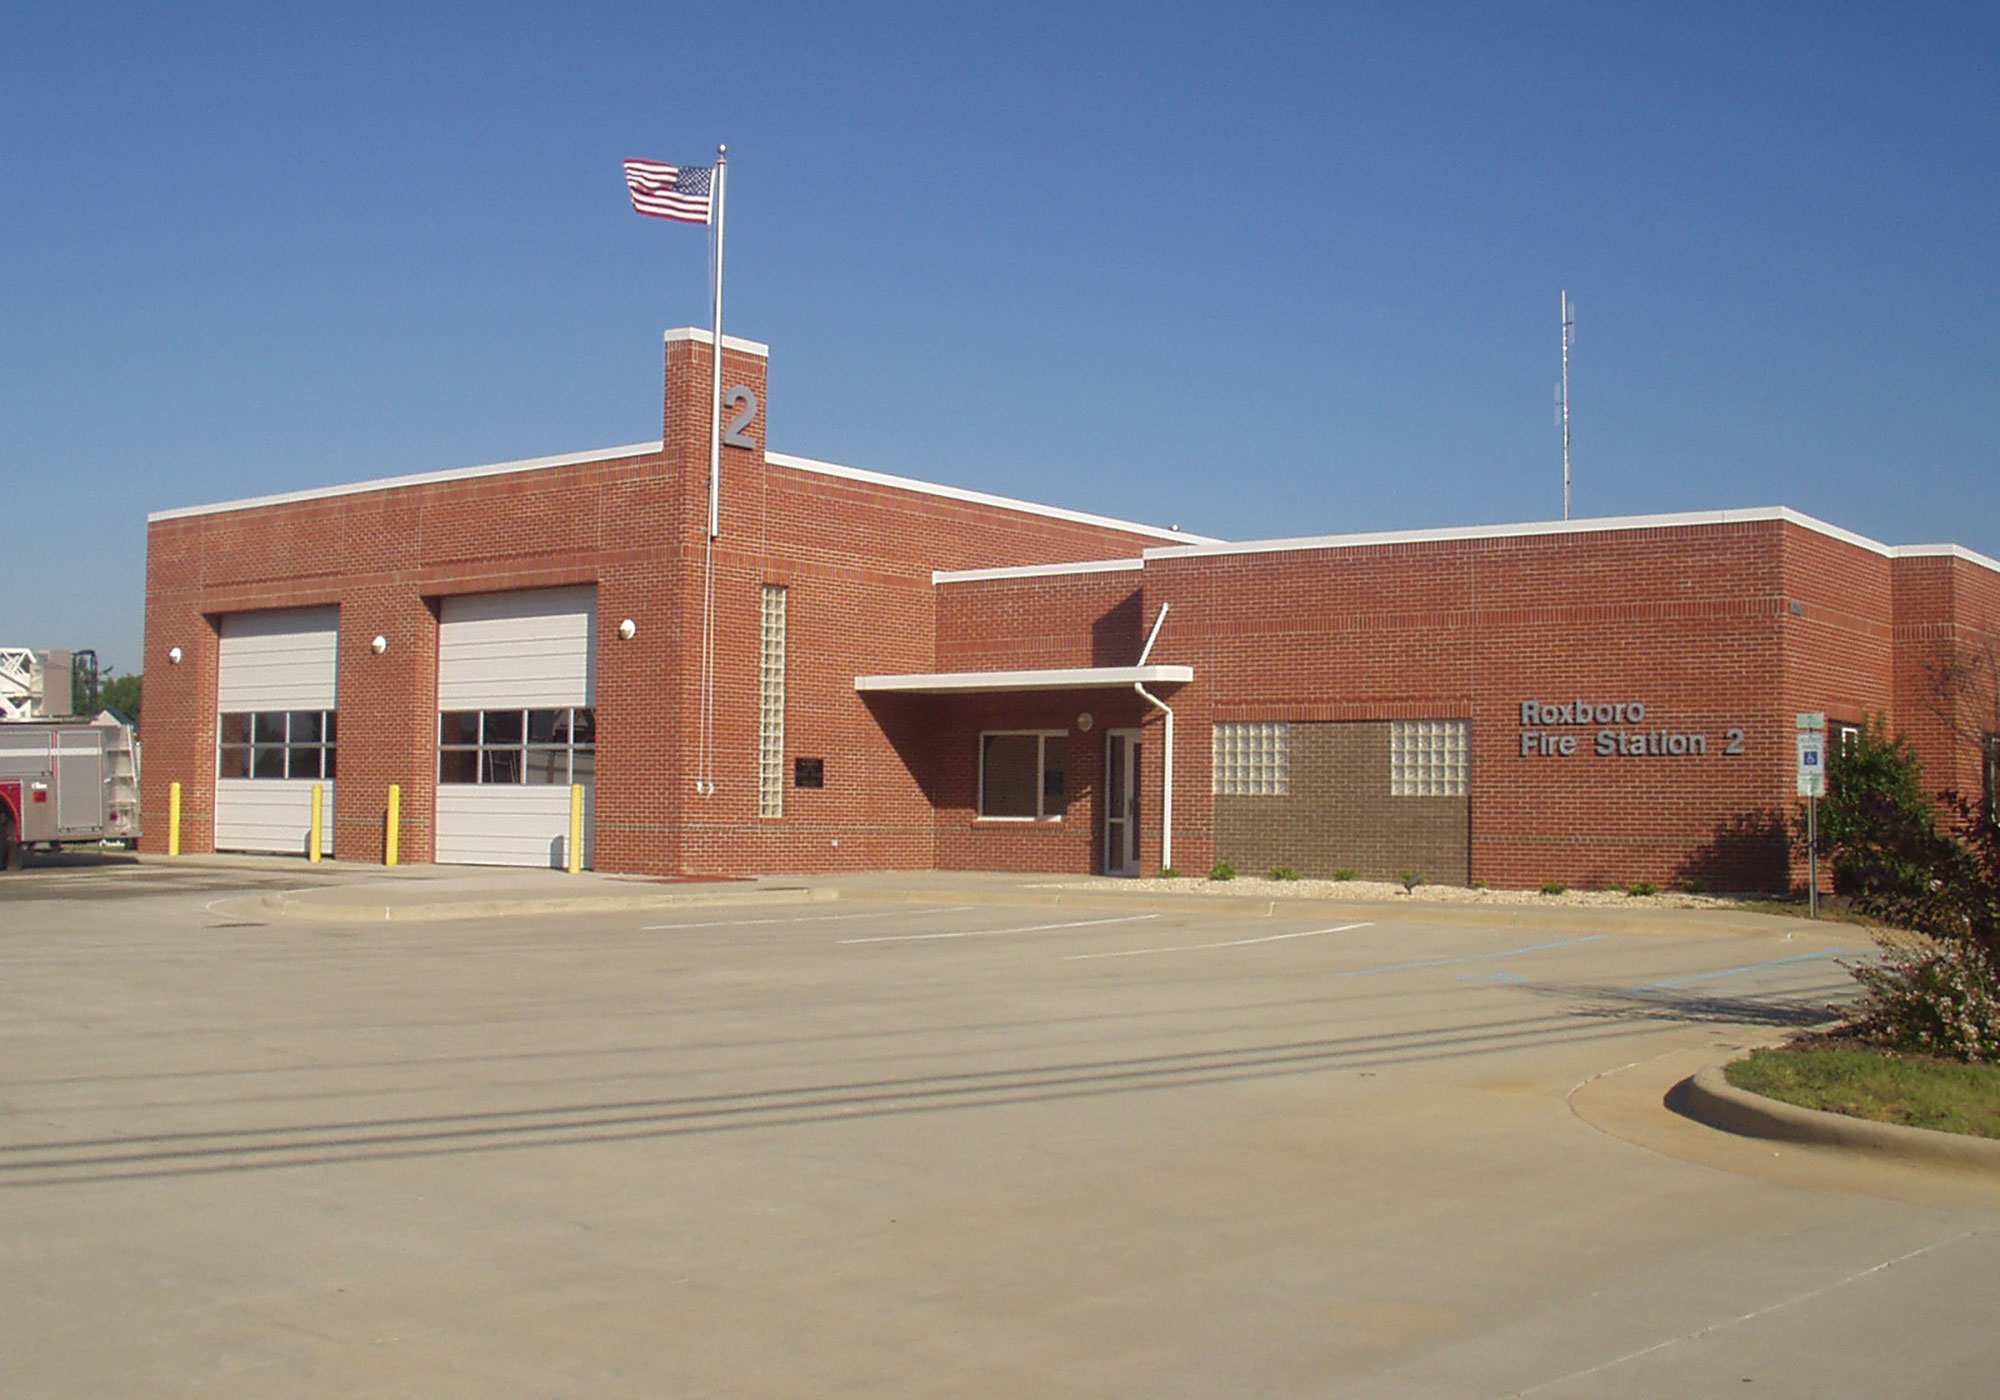 Roxboro Fire Stations No. 2 & 3